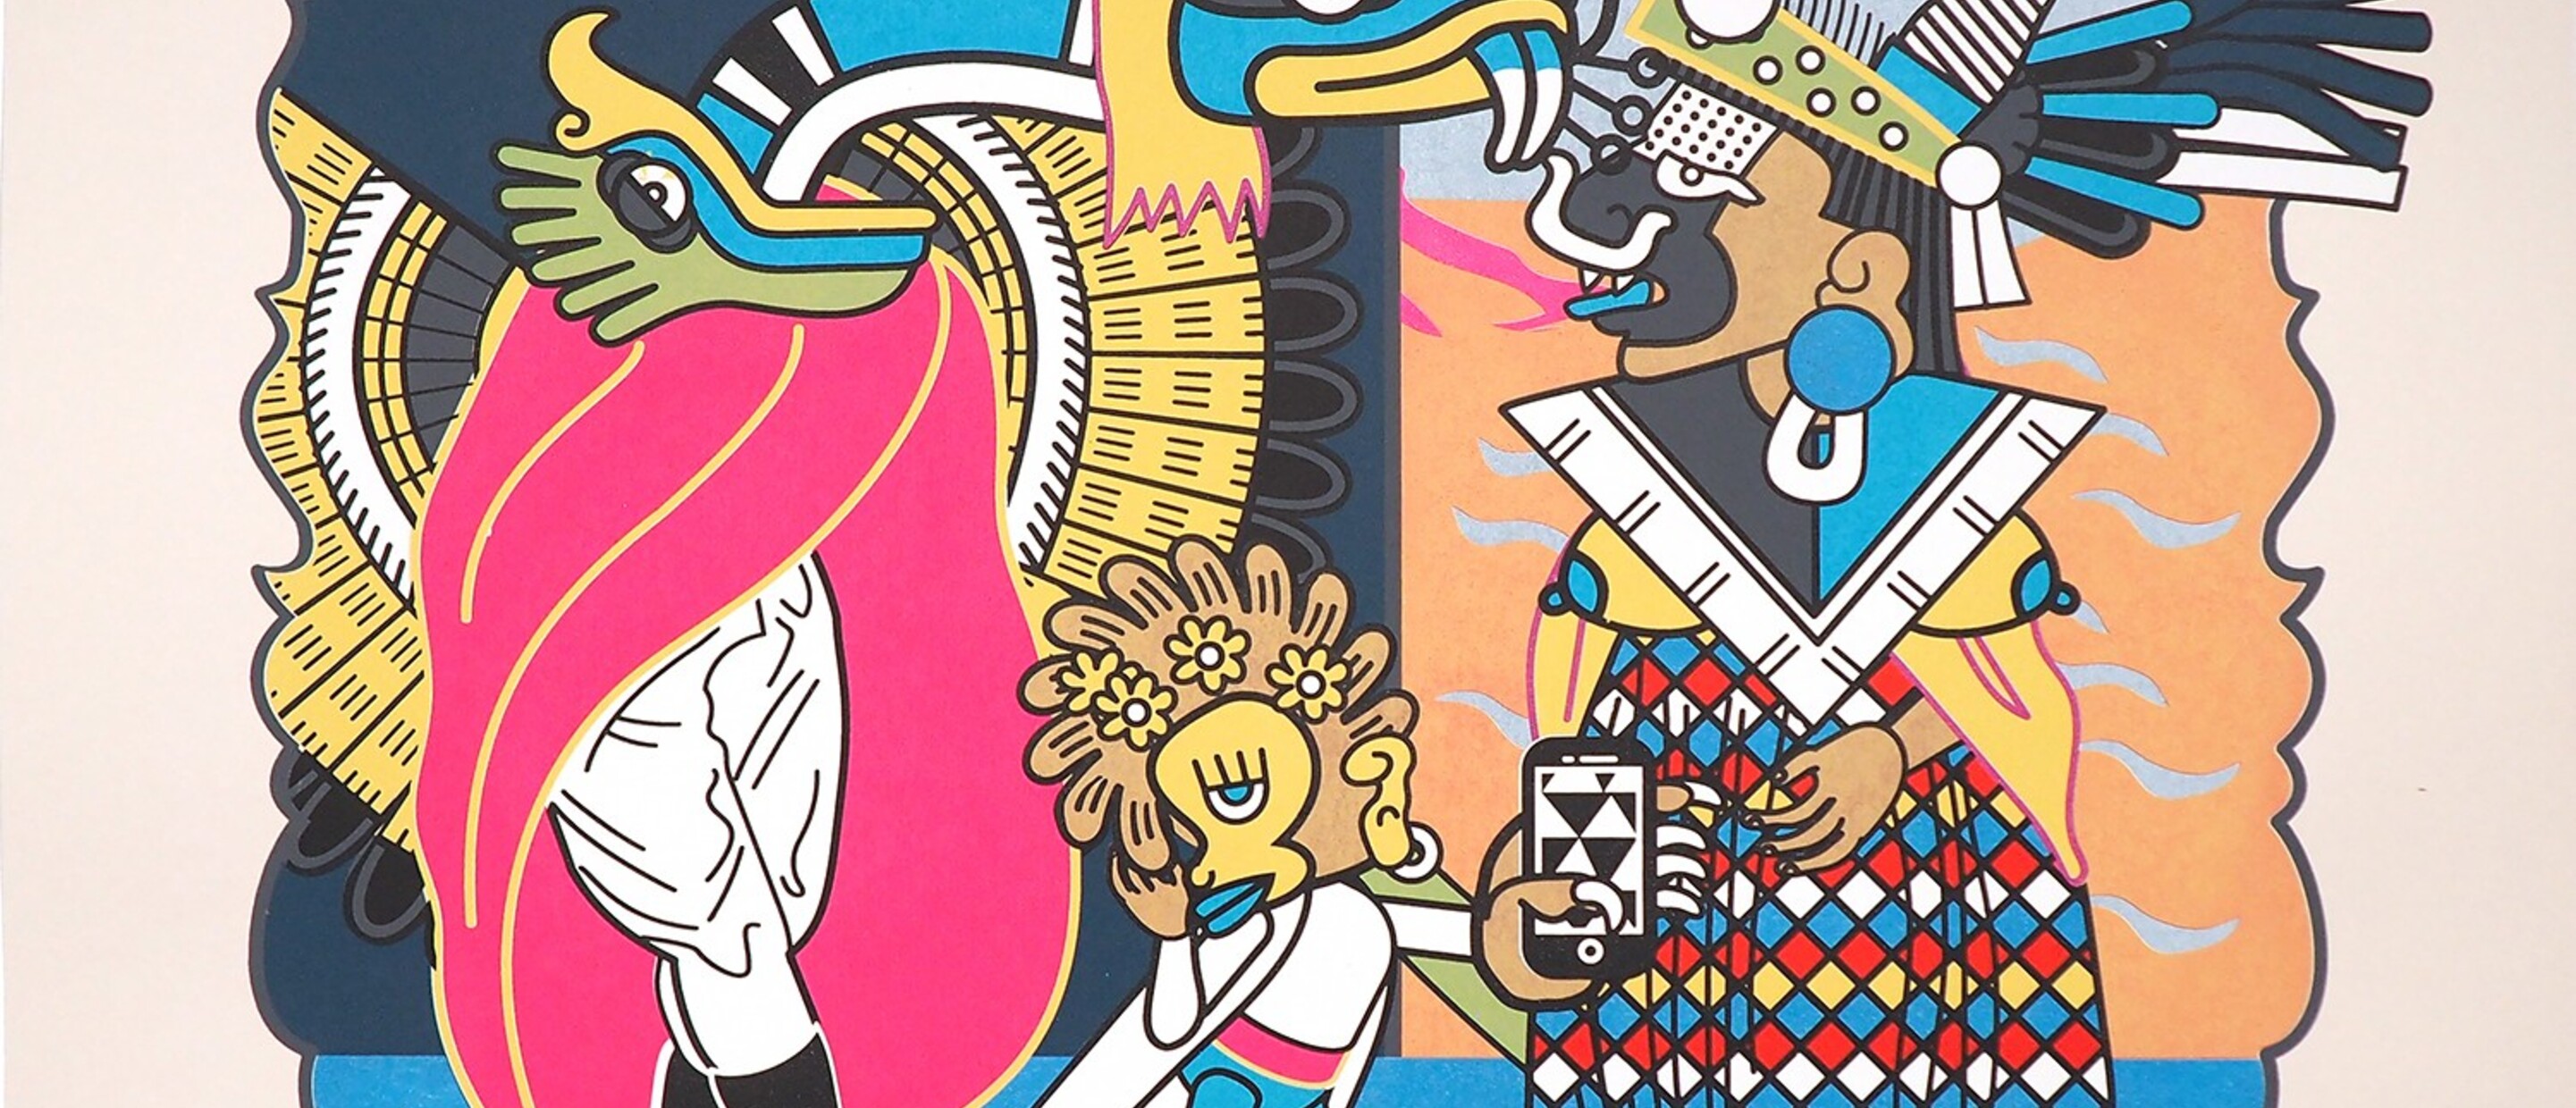 colorful print of 4 figures with caption "Ahi te estas no 16"